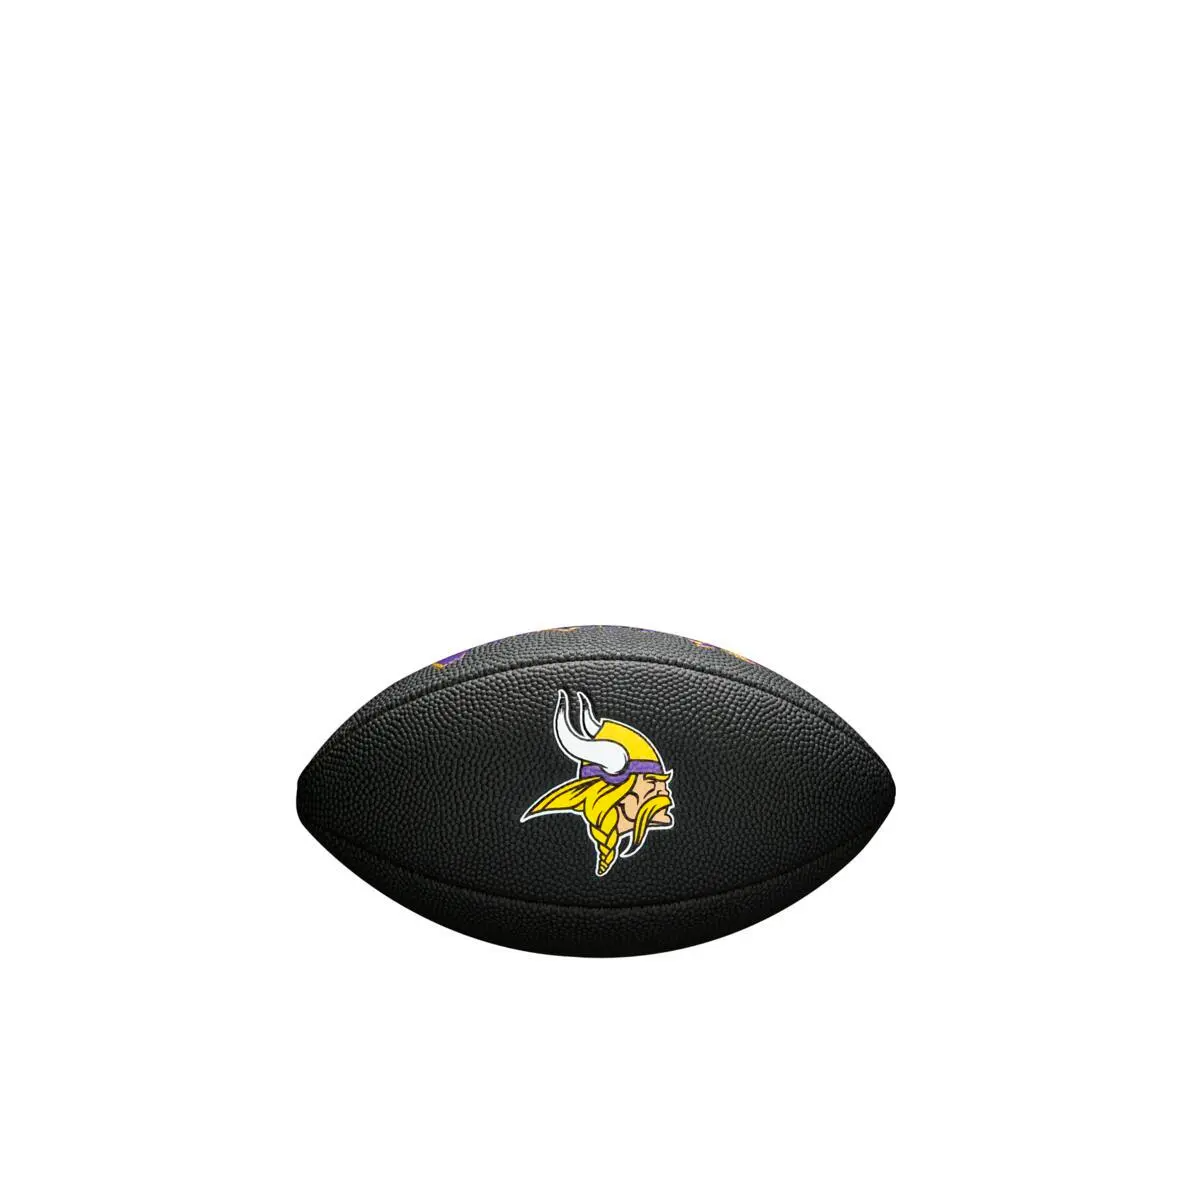 Mini ballon de Football Américain Wilson des Vikings de Minnesota